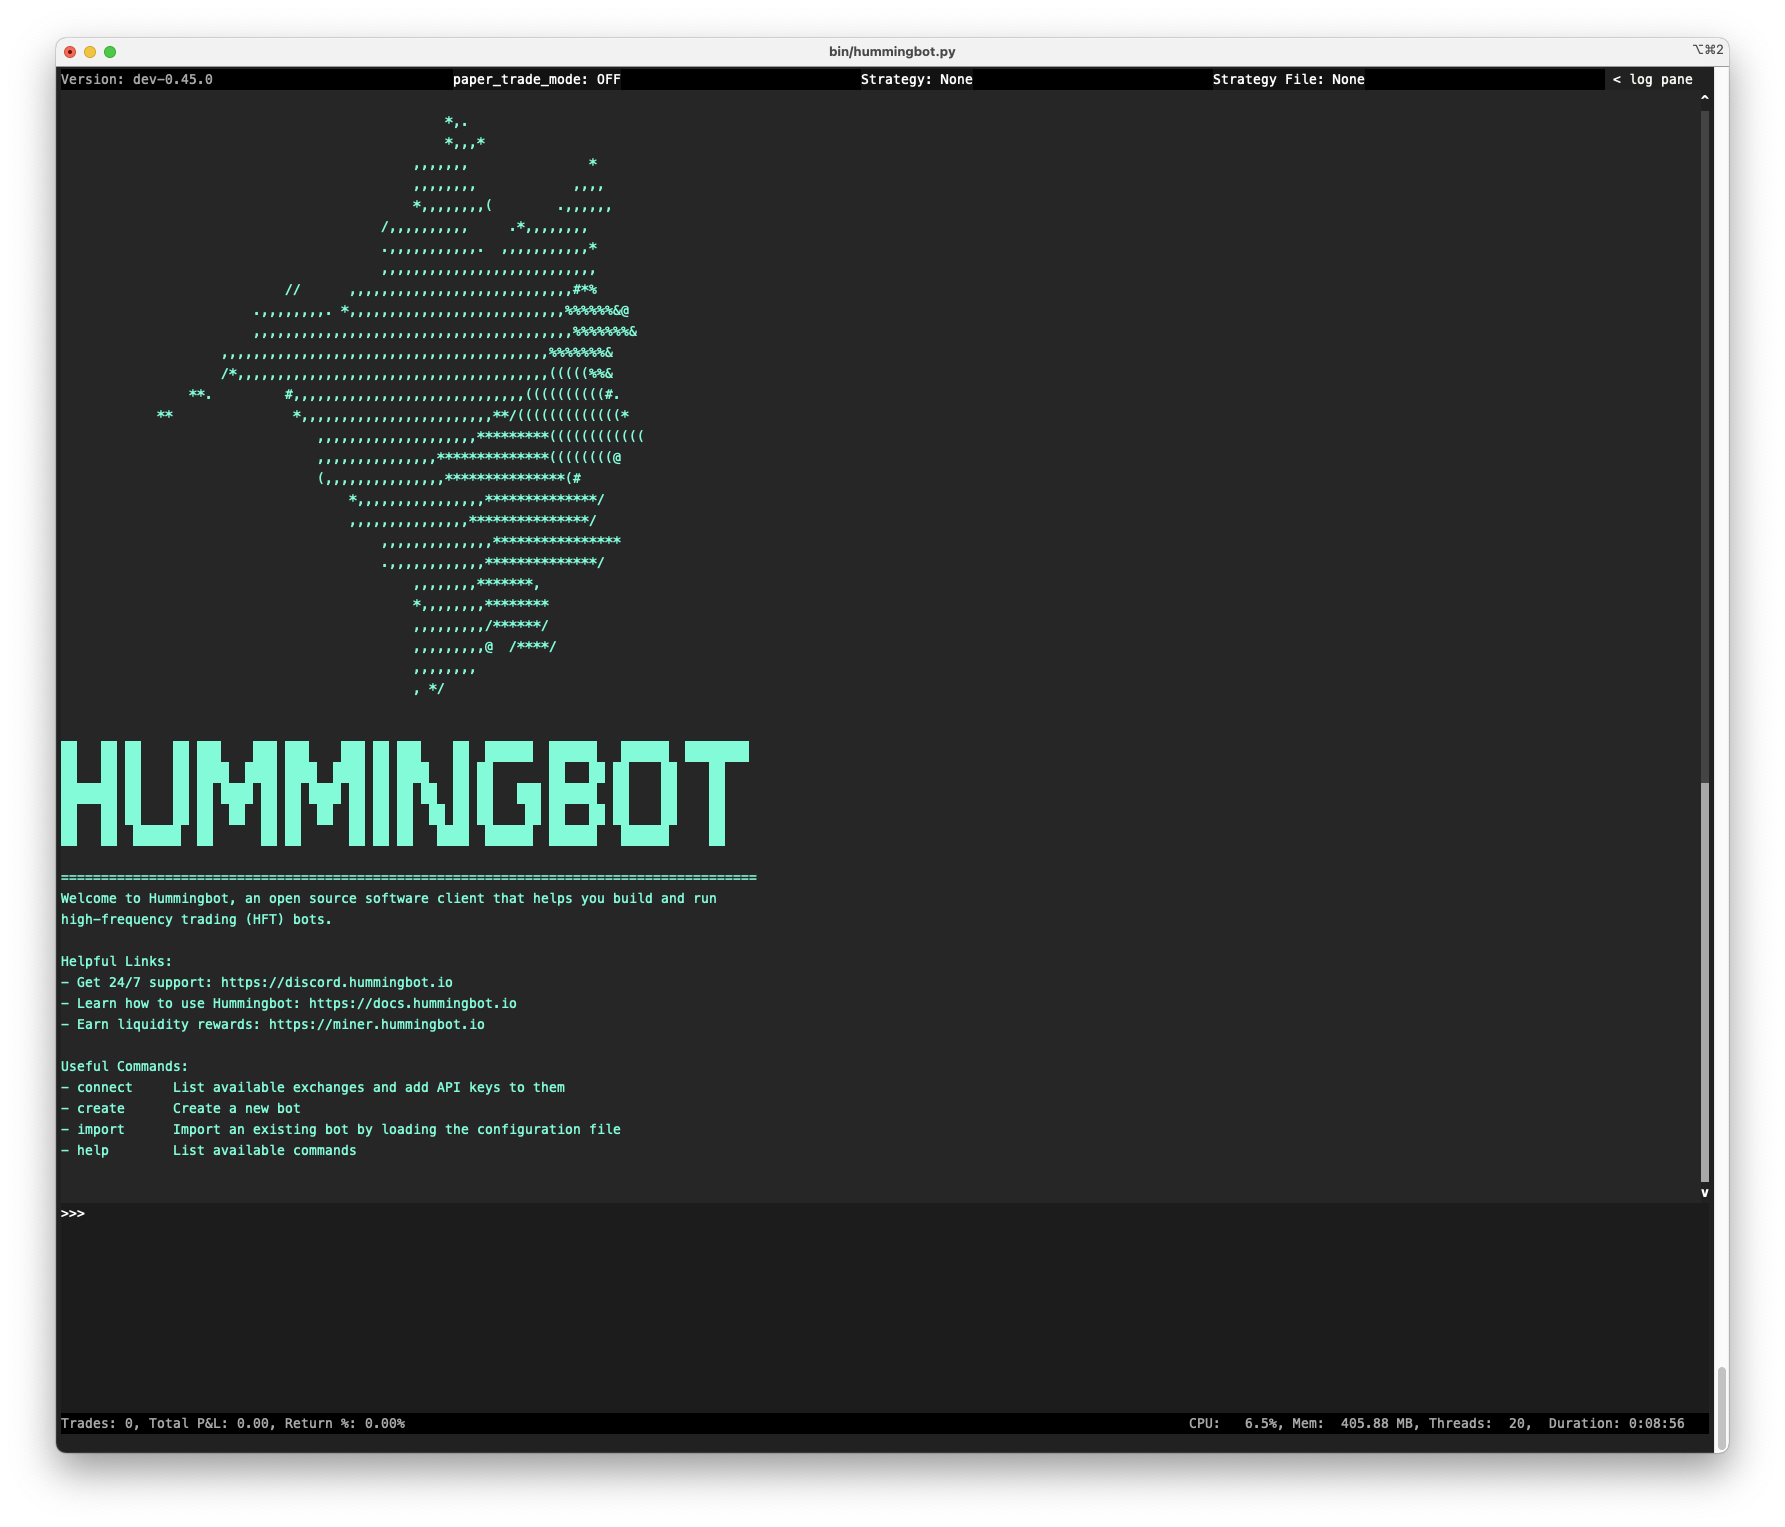 New Hummingbot UI